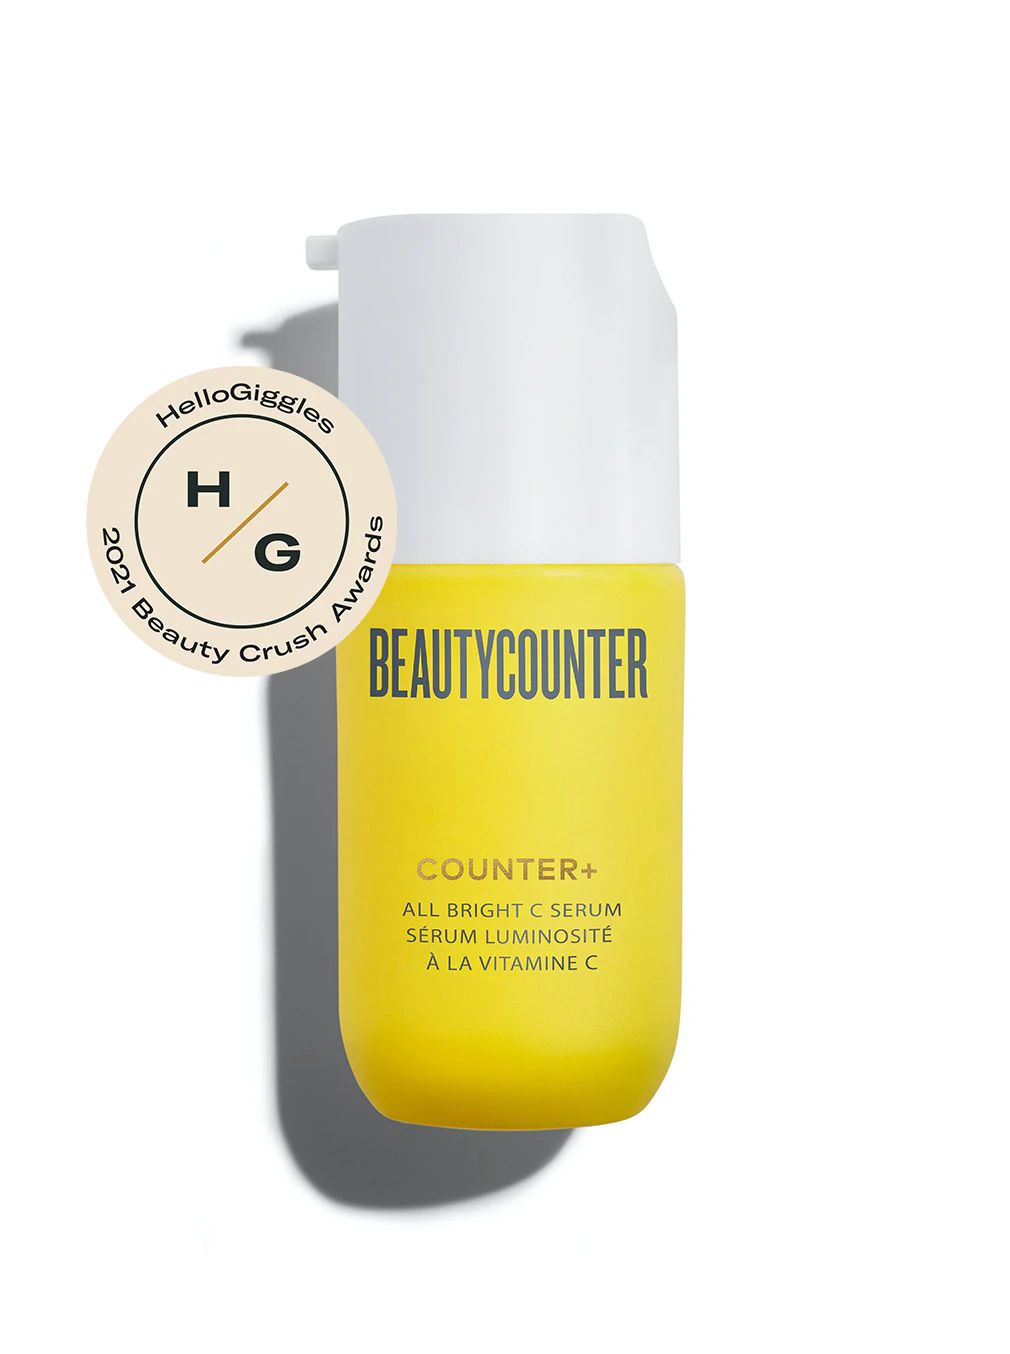 Counter+ All Bright C Serum | Beautycounter.com